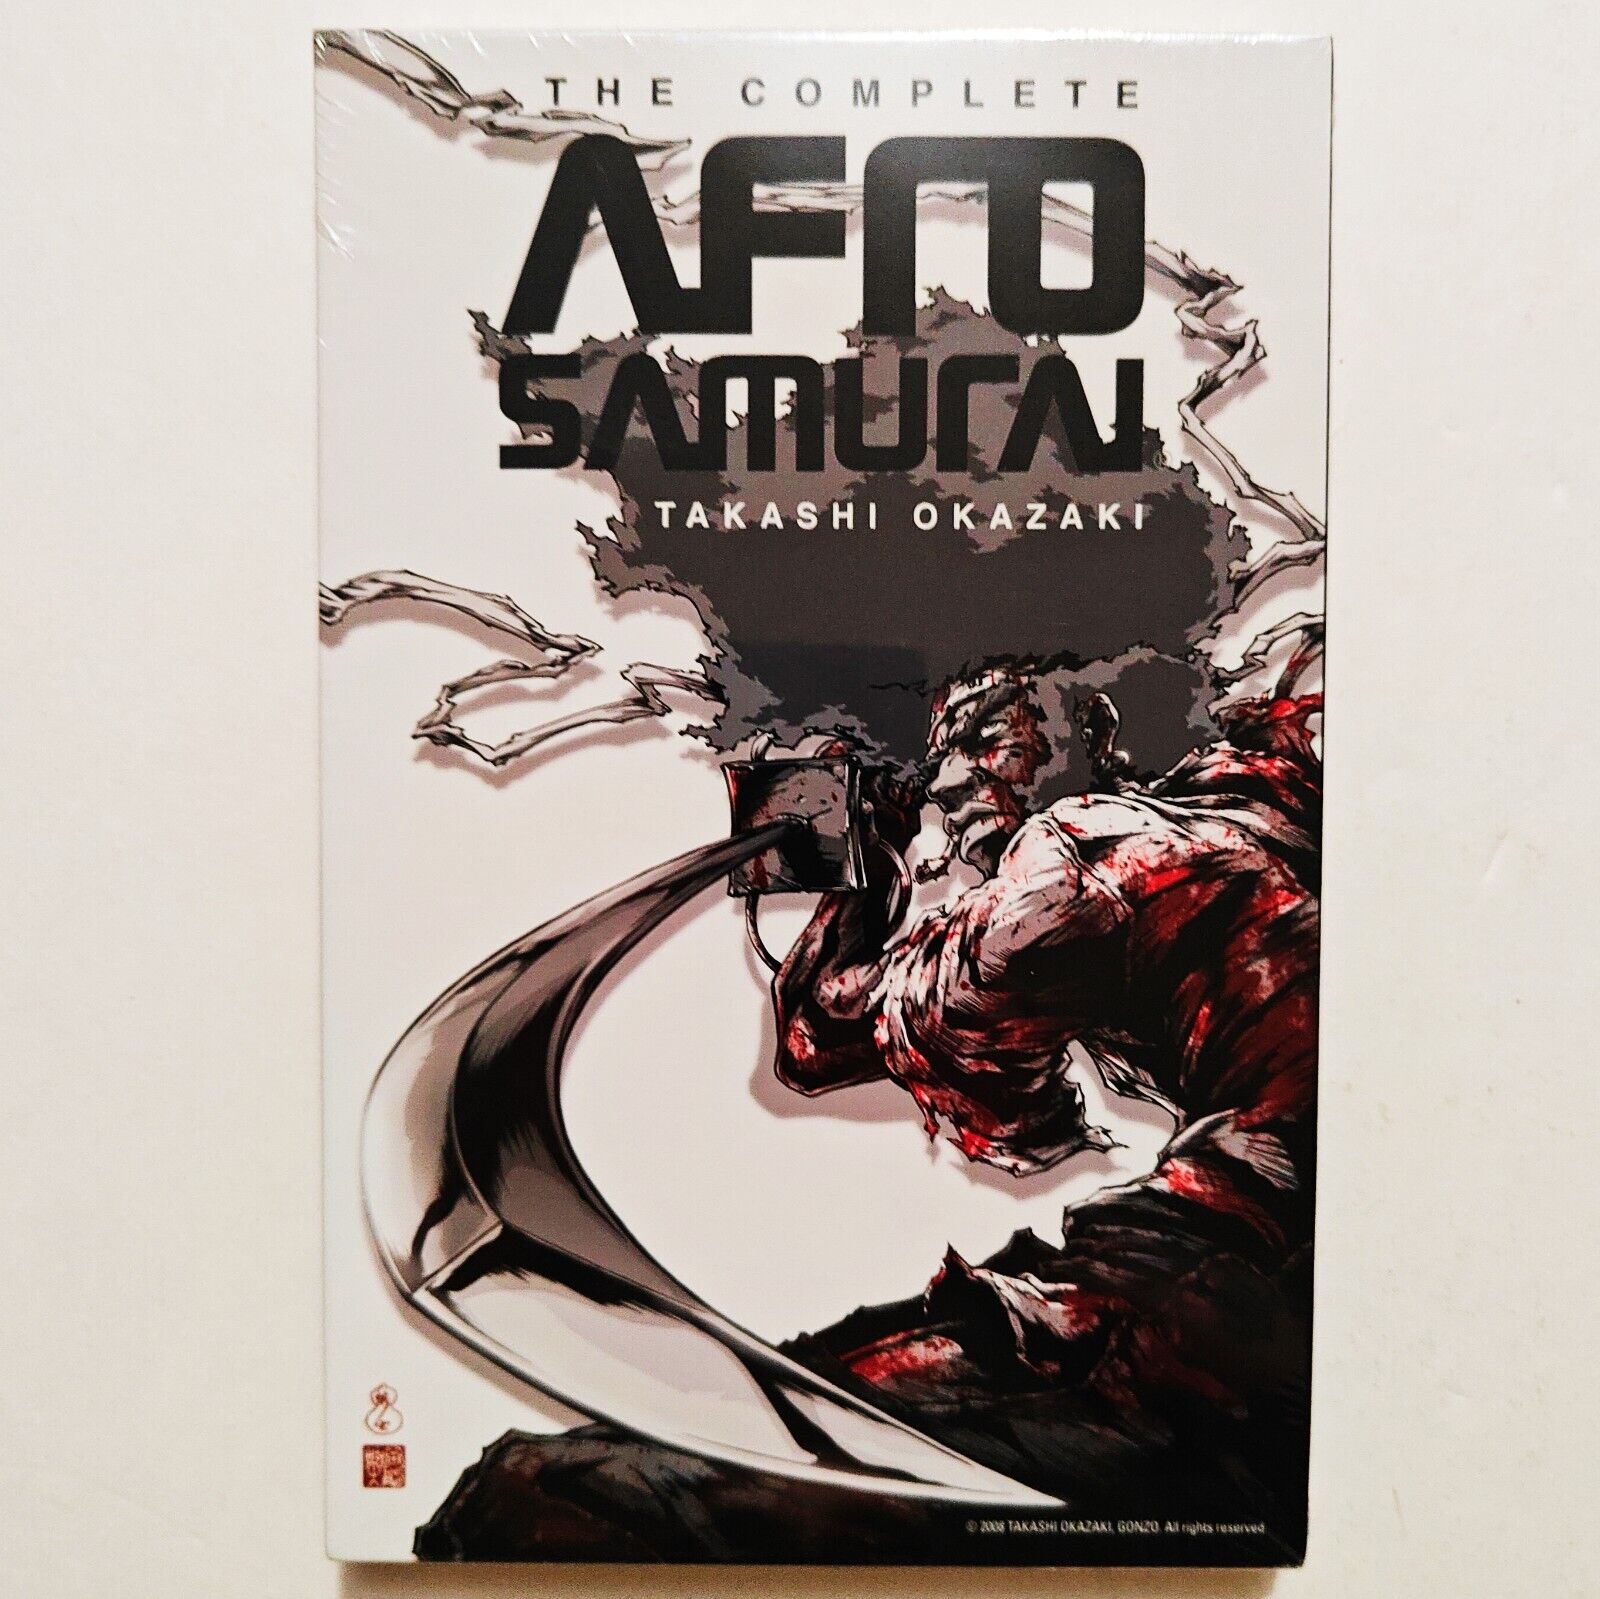 The Complete Afro Samurai (1-2) Box Set Takashi Okazaki Manga DM Variant SEALED